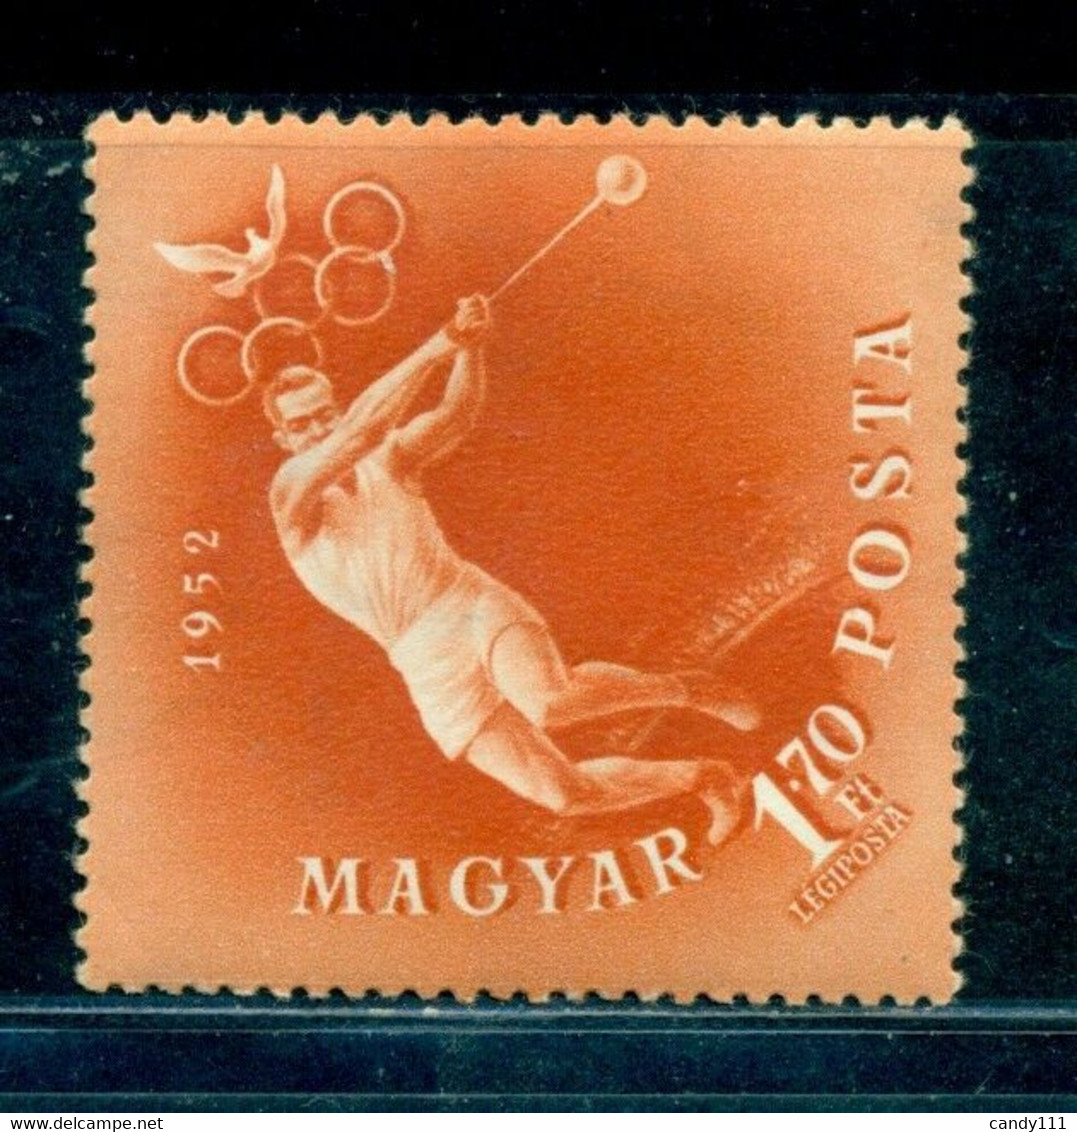 1952 Hammer Throw, Hammerwerfen, Pigeon, Helsinky Olympics, Hungary, Mi. 1251, MNH - Sommer 1952: Helsinki